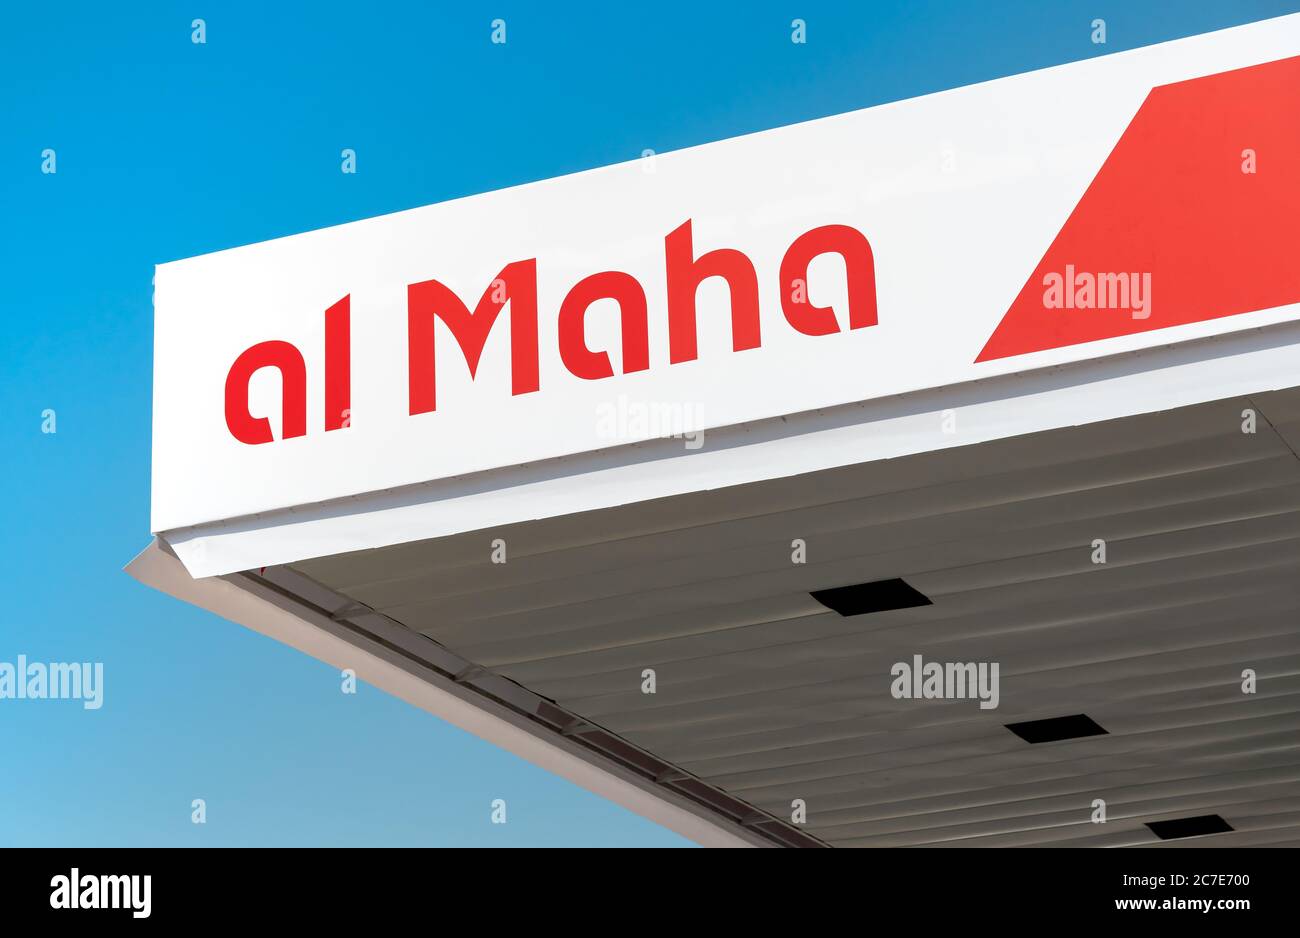 Sharqiyah South Governorate, Oman - 14 febbraio 2020: Al Maha benzina Filing Station, è una società petrolifera con sede in Oman. Foto Stock